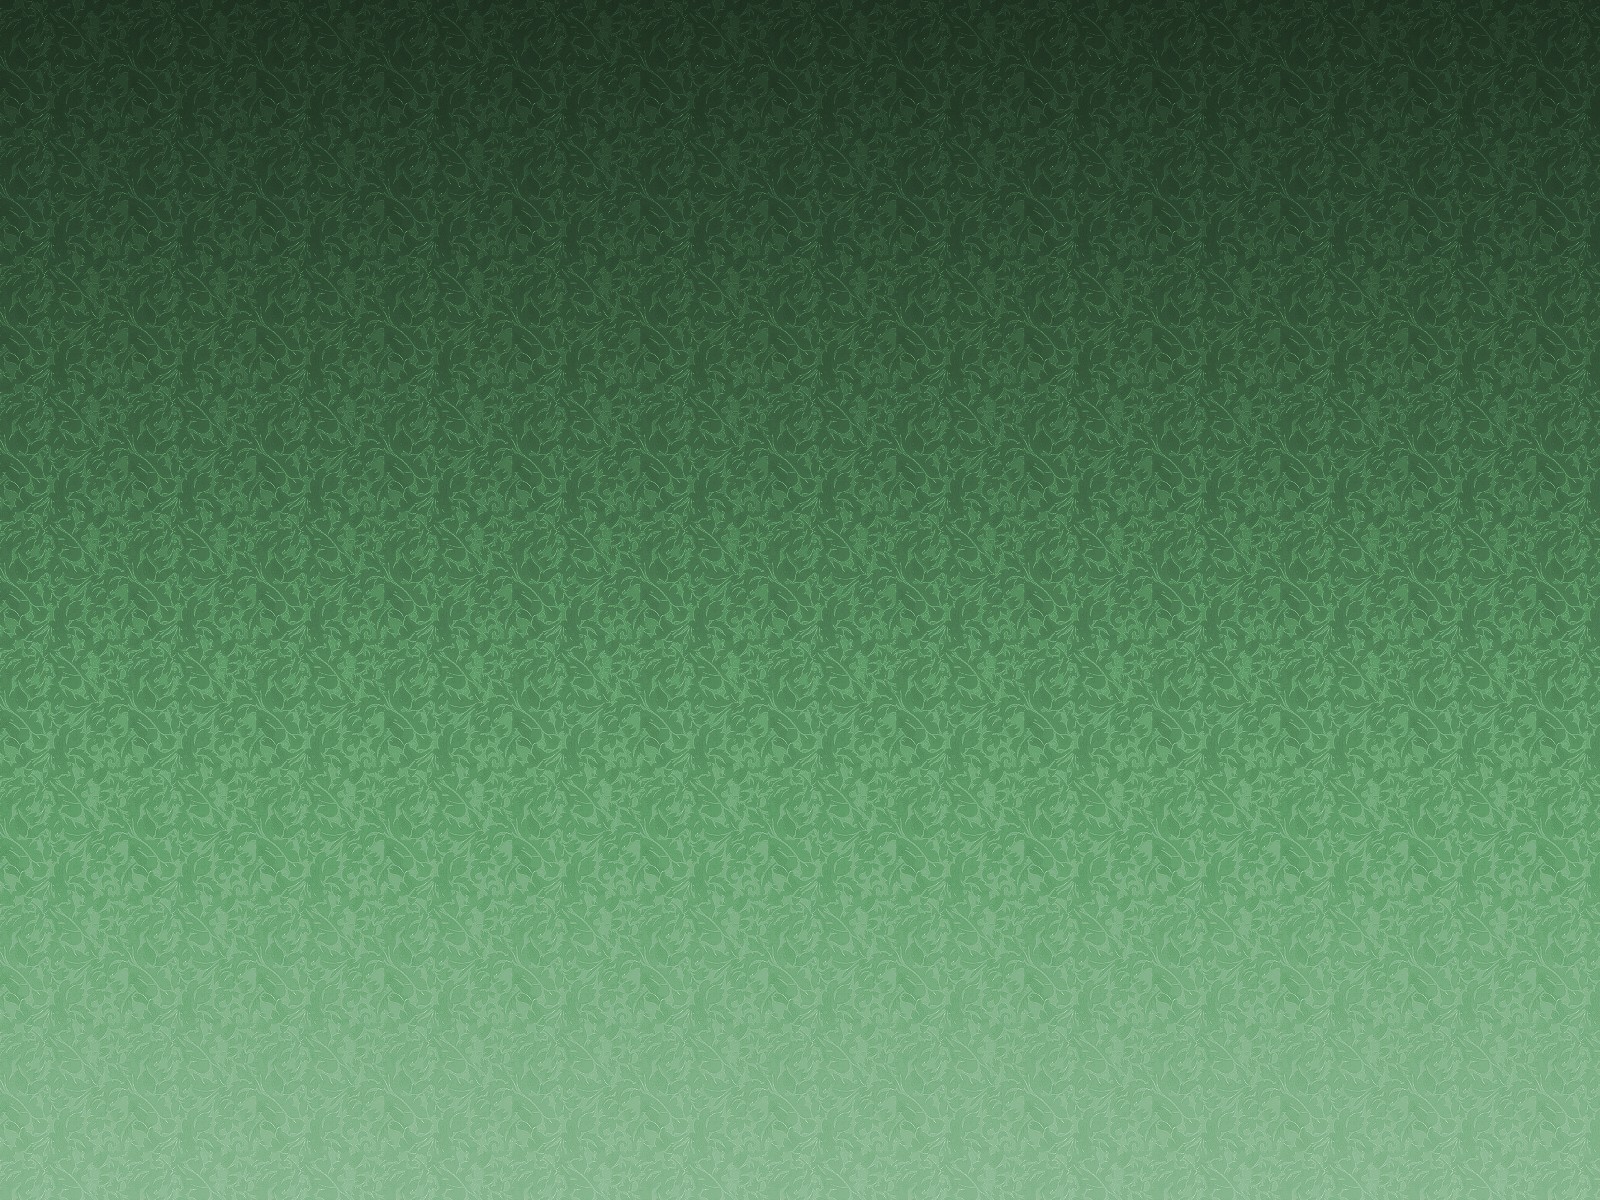 General 1600x1200 minimalism green background texture pattern